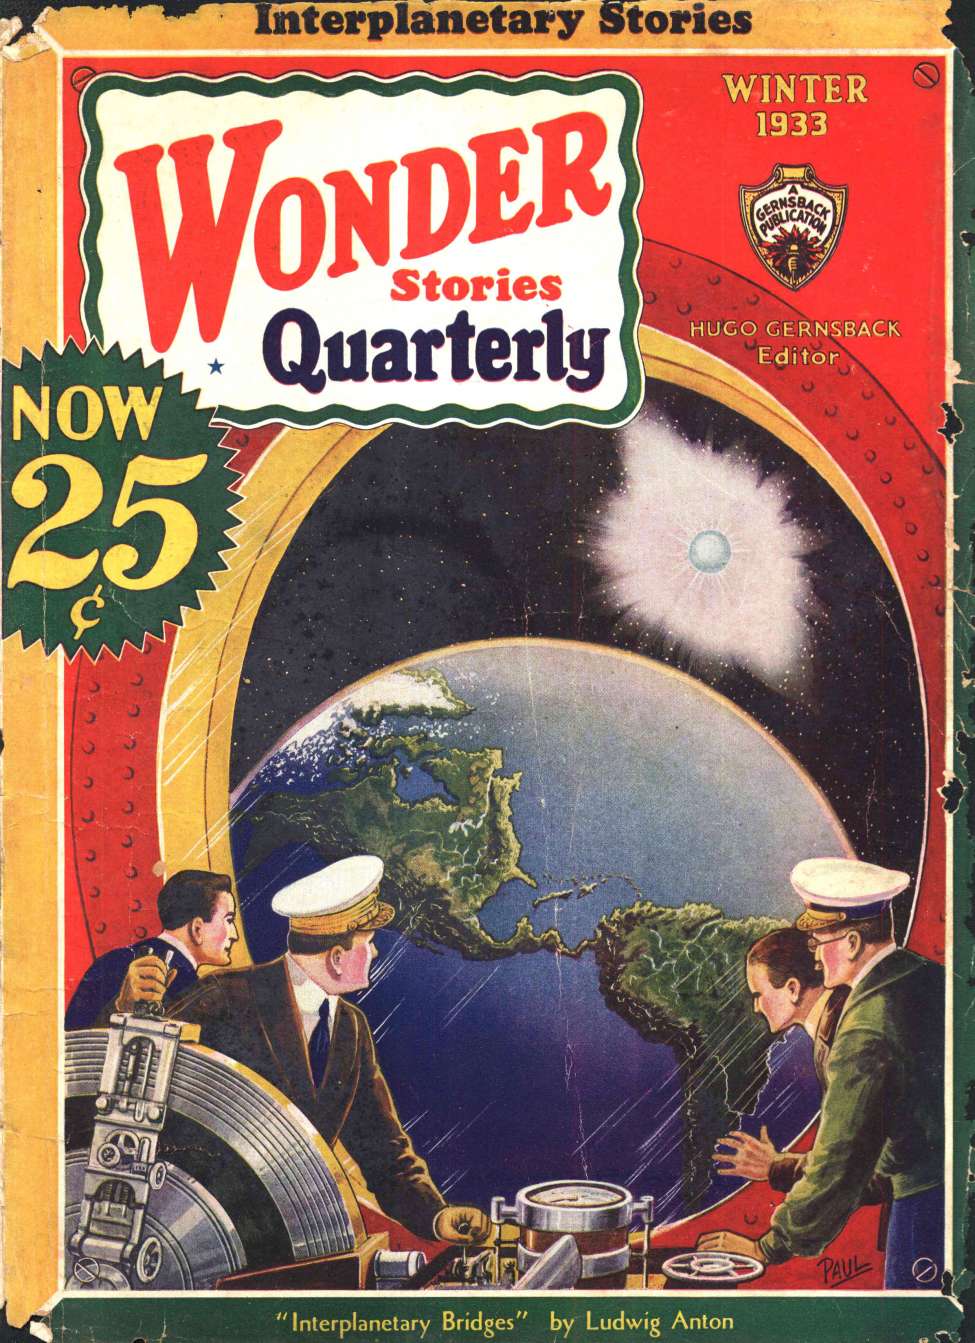 Comic Book Cover For Wonder Stories Quarterly v4 2 - Interplanetary Bridges - Ludwig Anton